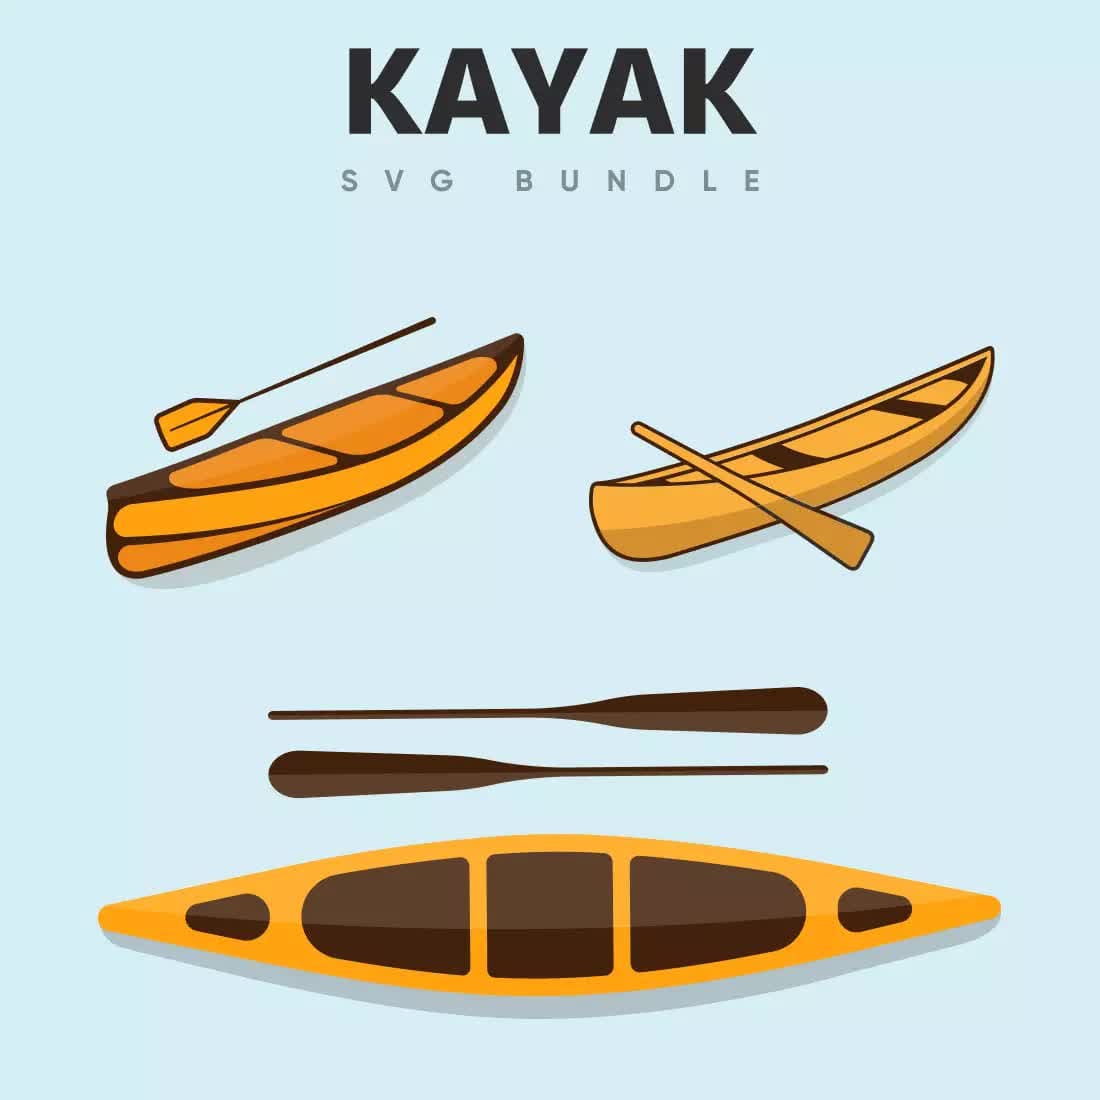 Kayak SVG Bundle Preview 2.